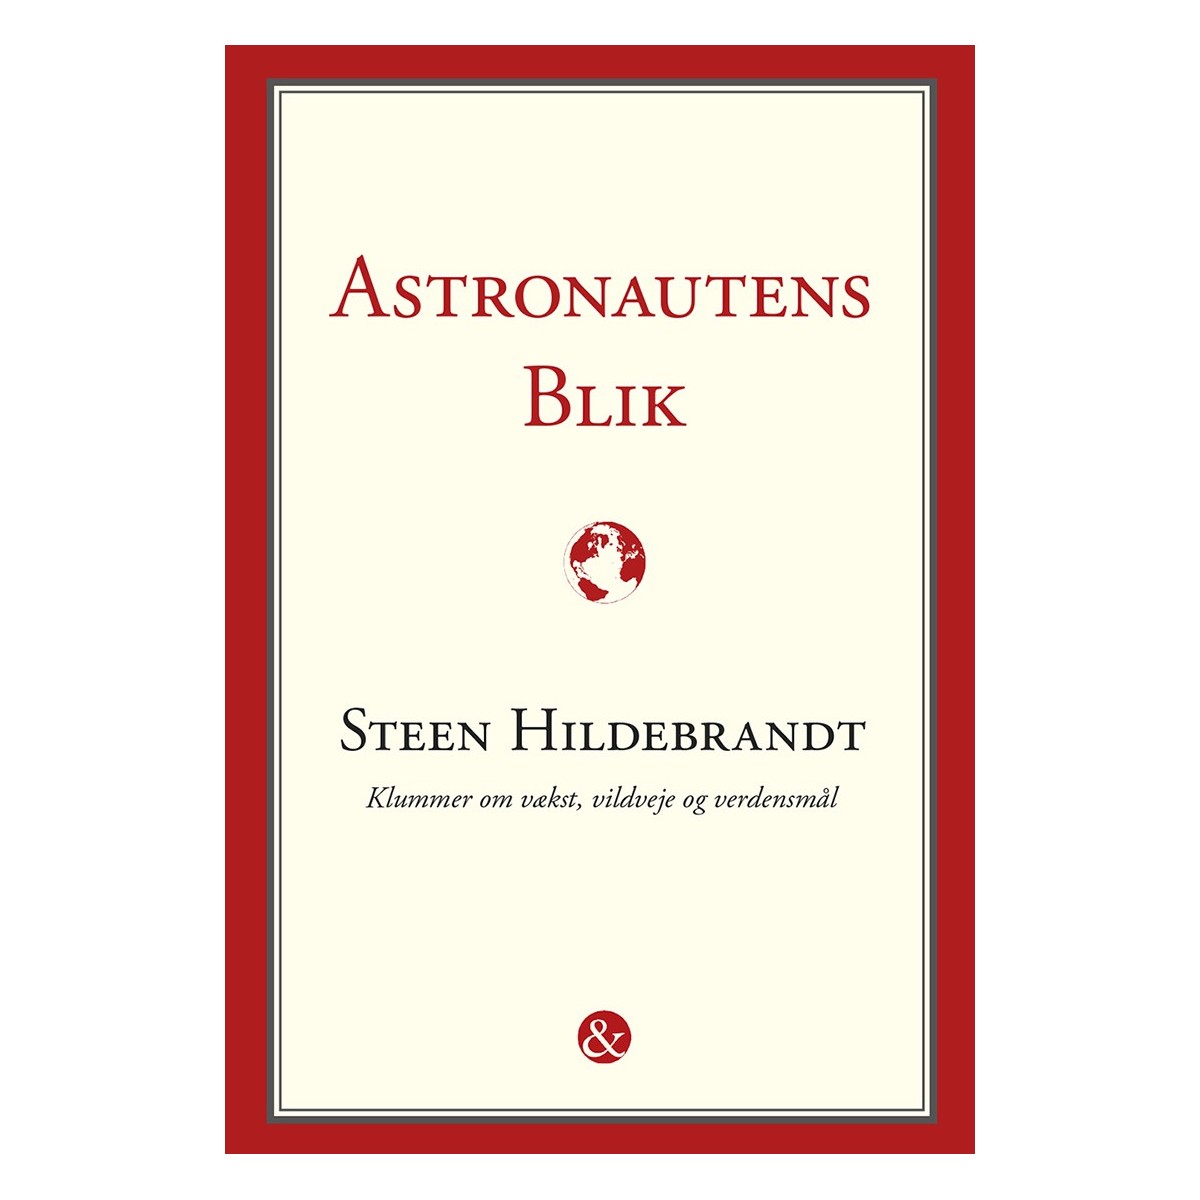 Steen Hildebrandt: Astronautens blik